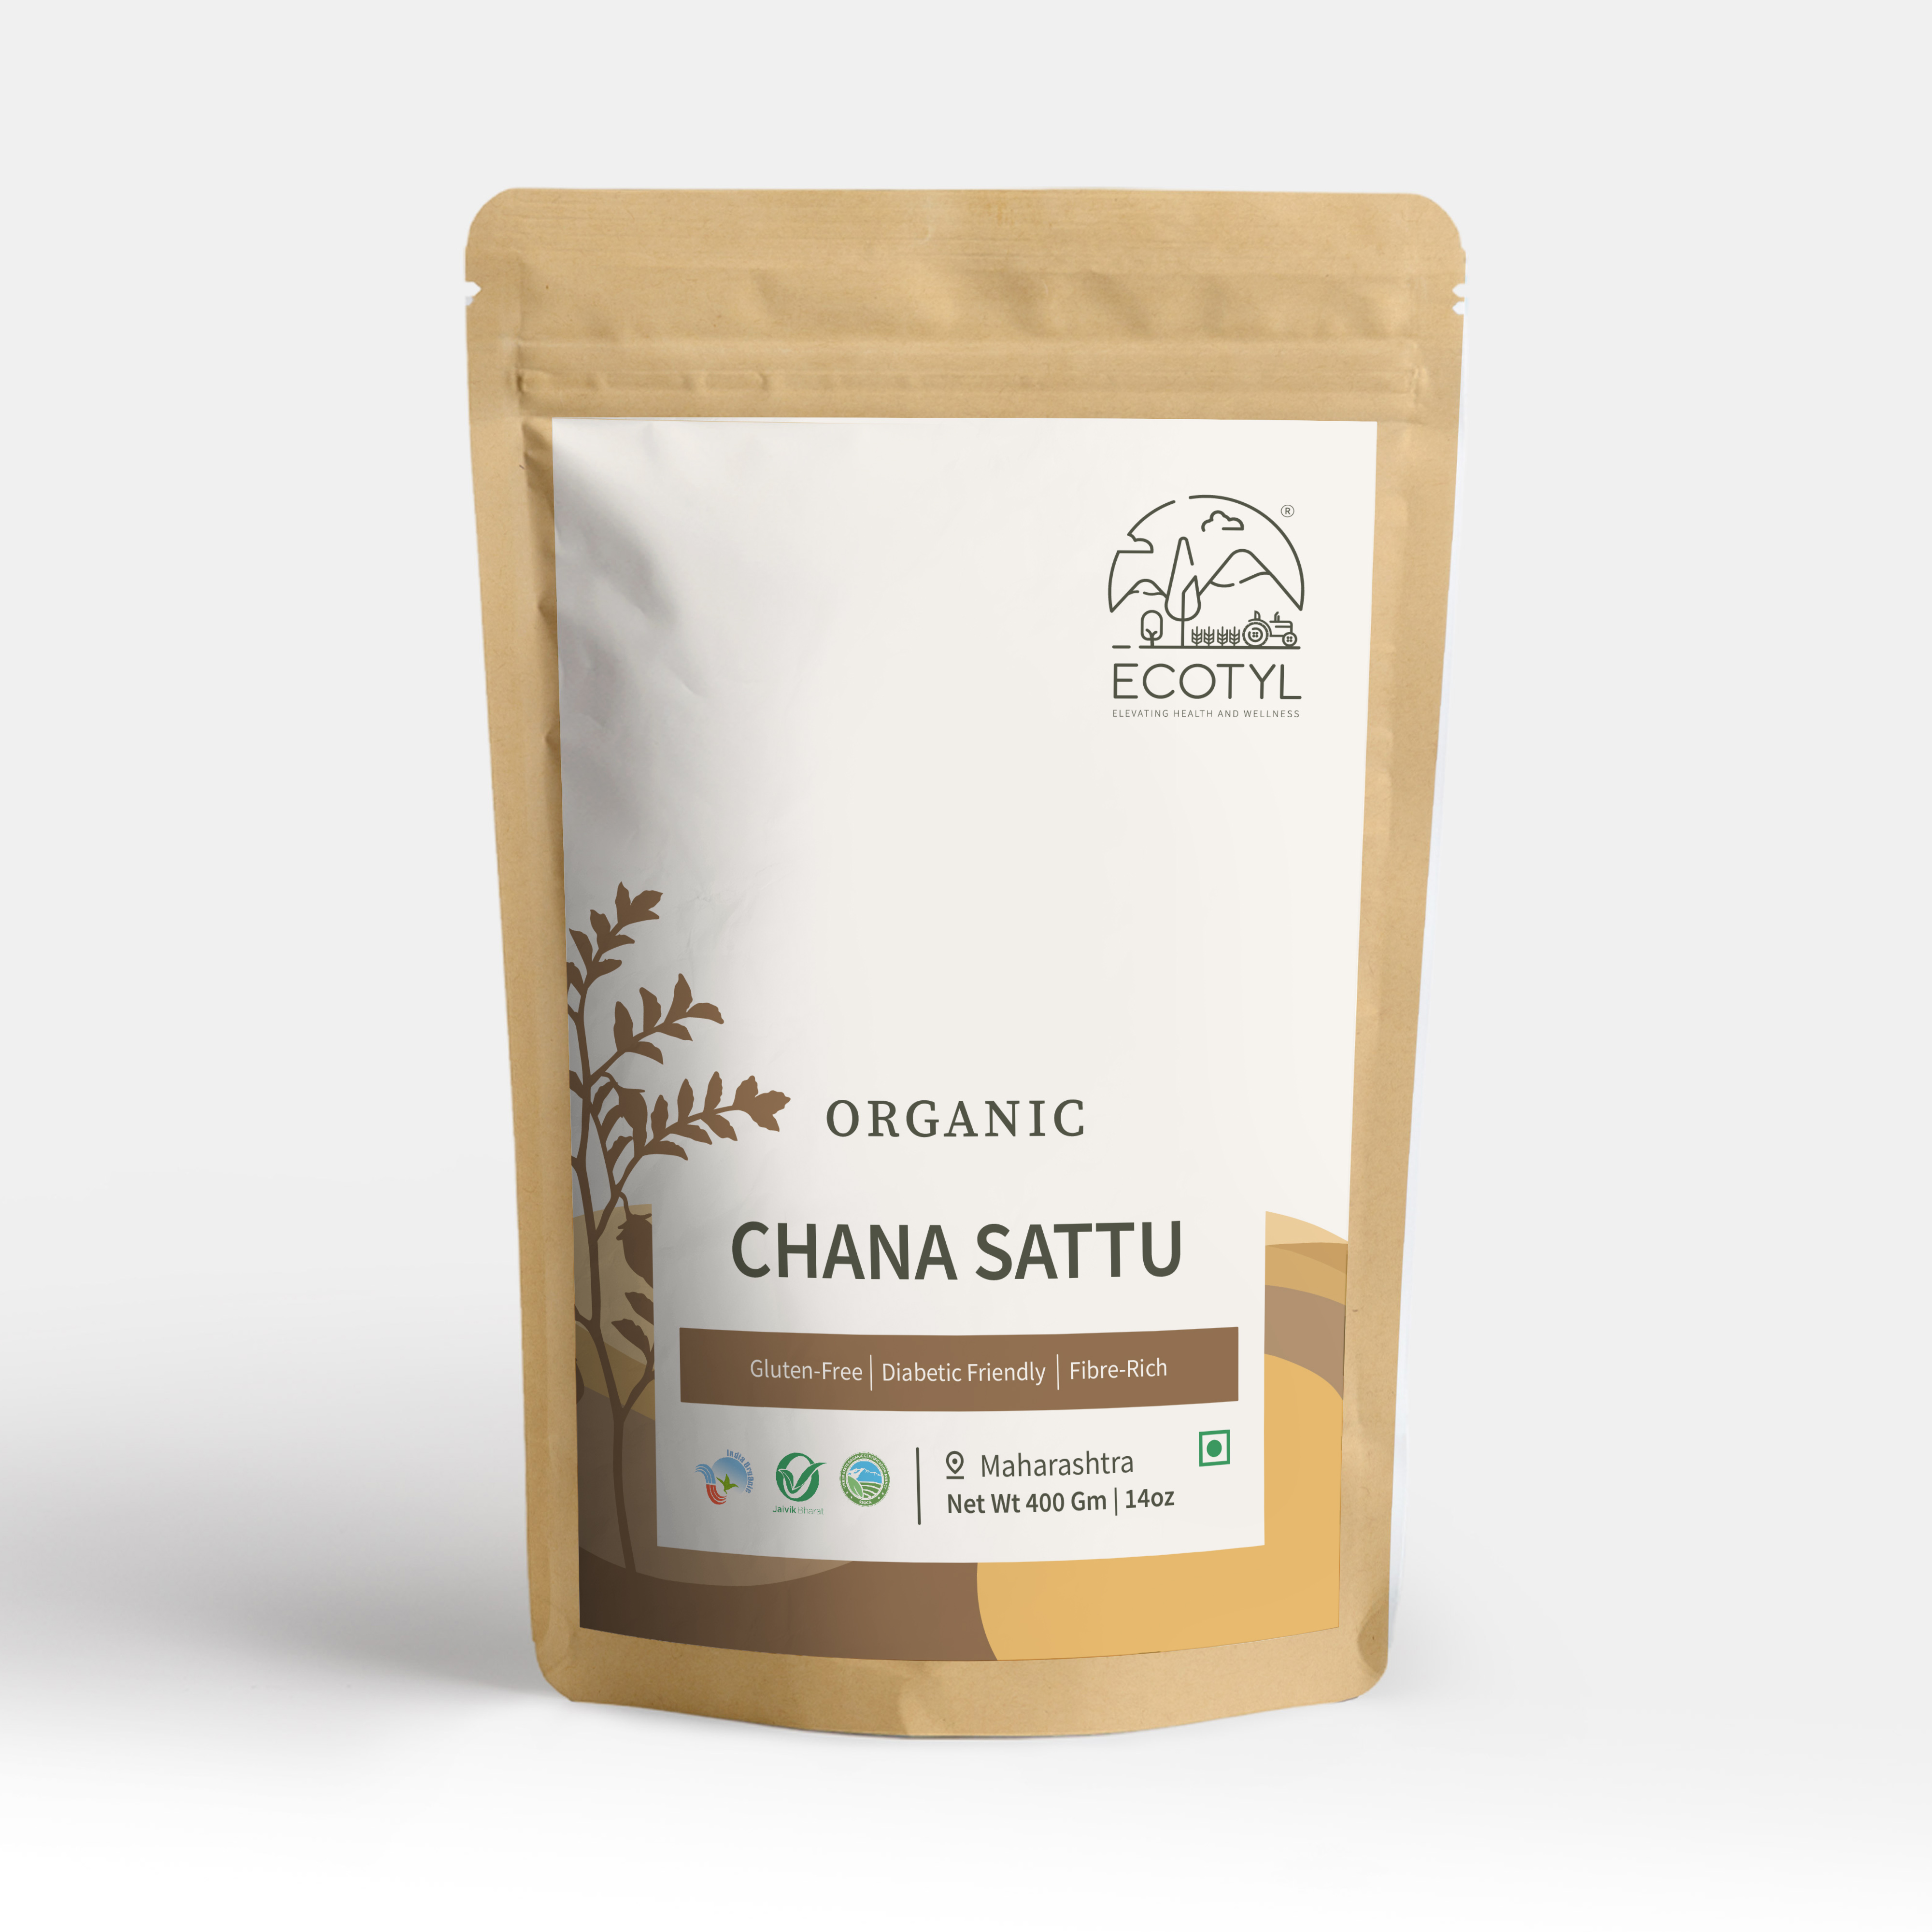 Buy Ecotyl Organic Chana Sattu - 400 g at Best Price Online